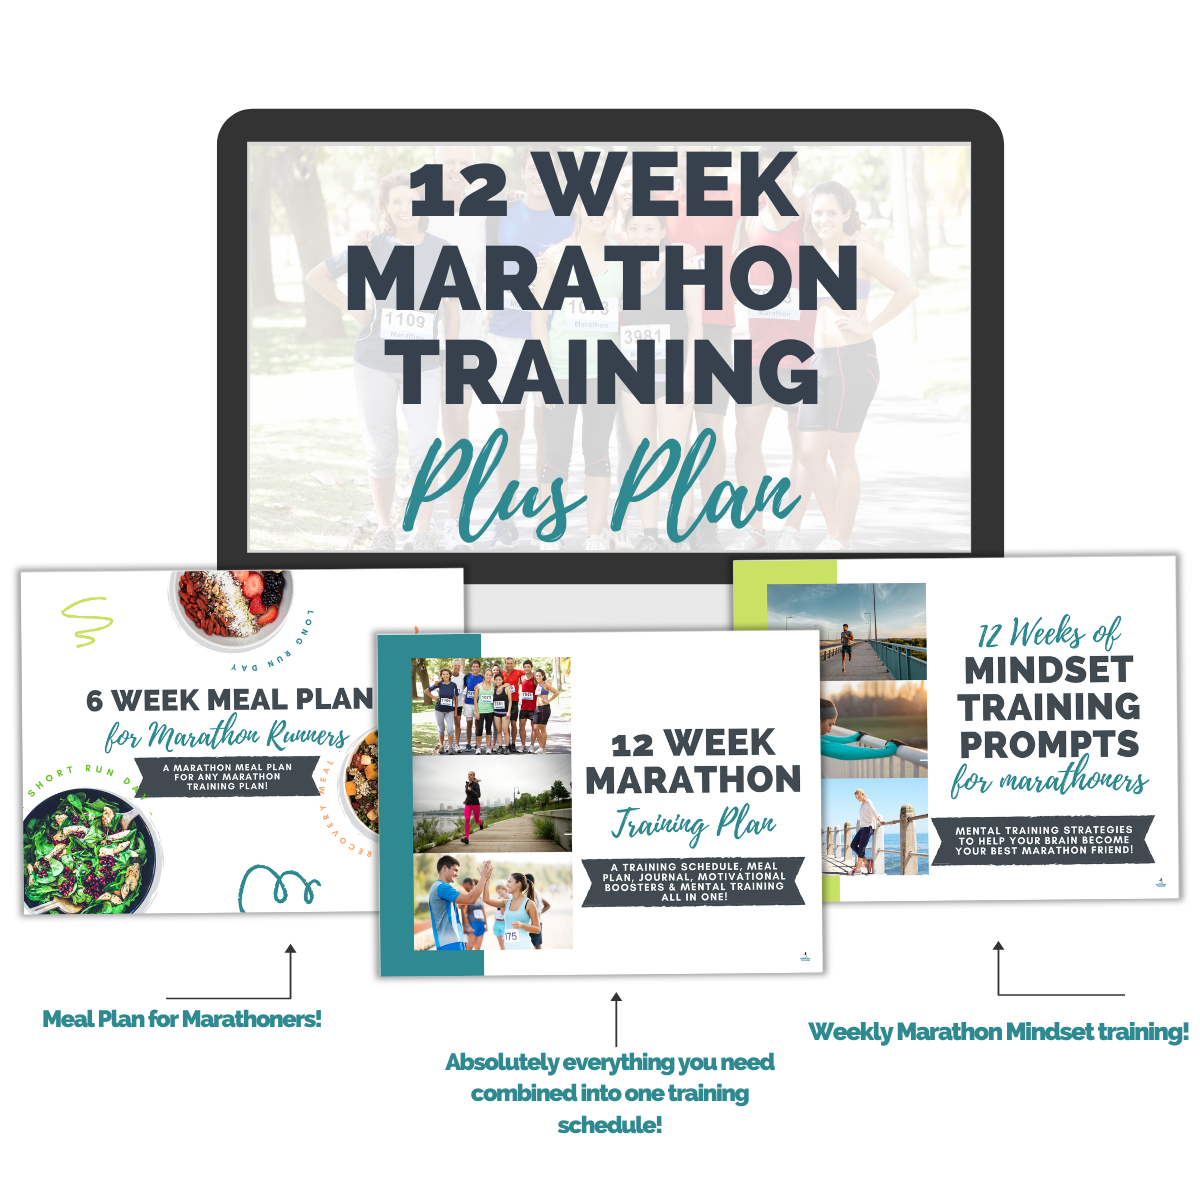 Another Mockup of the 12 Week Marathon Training Plan